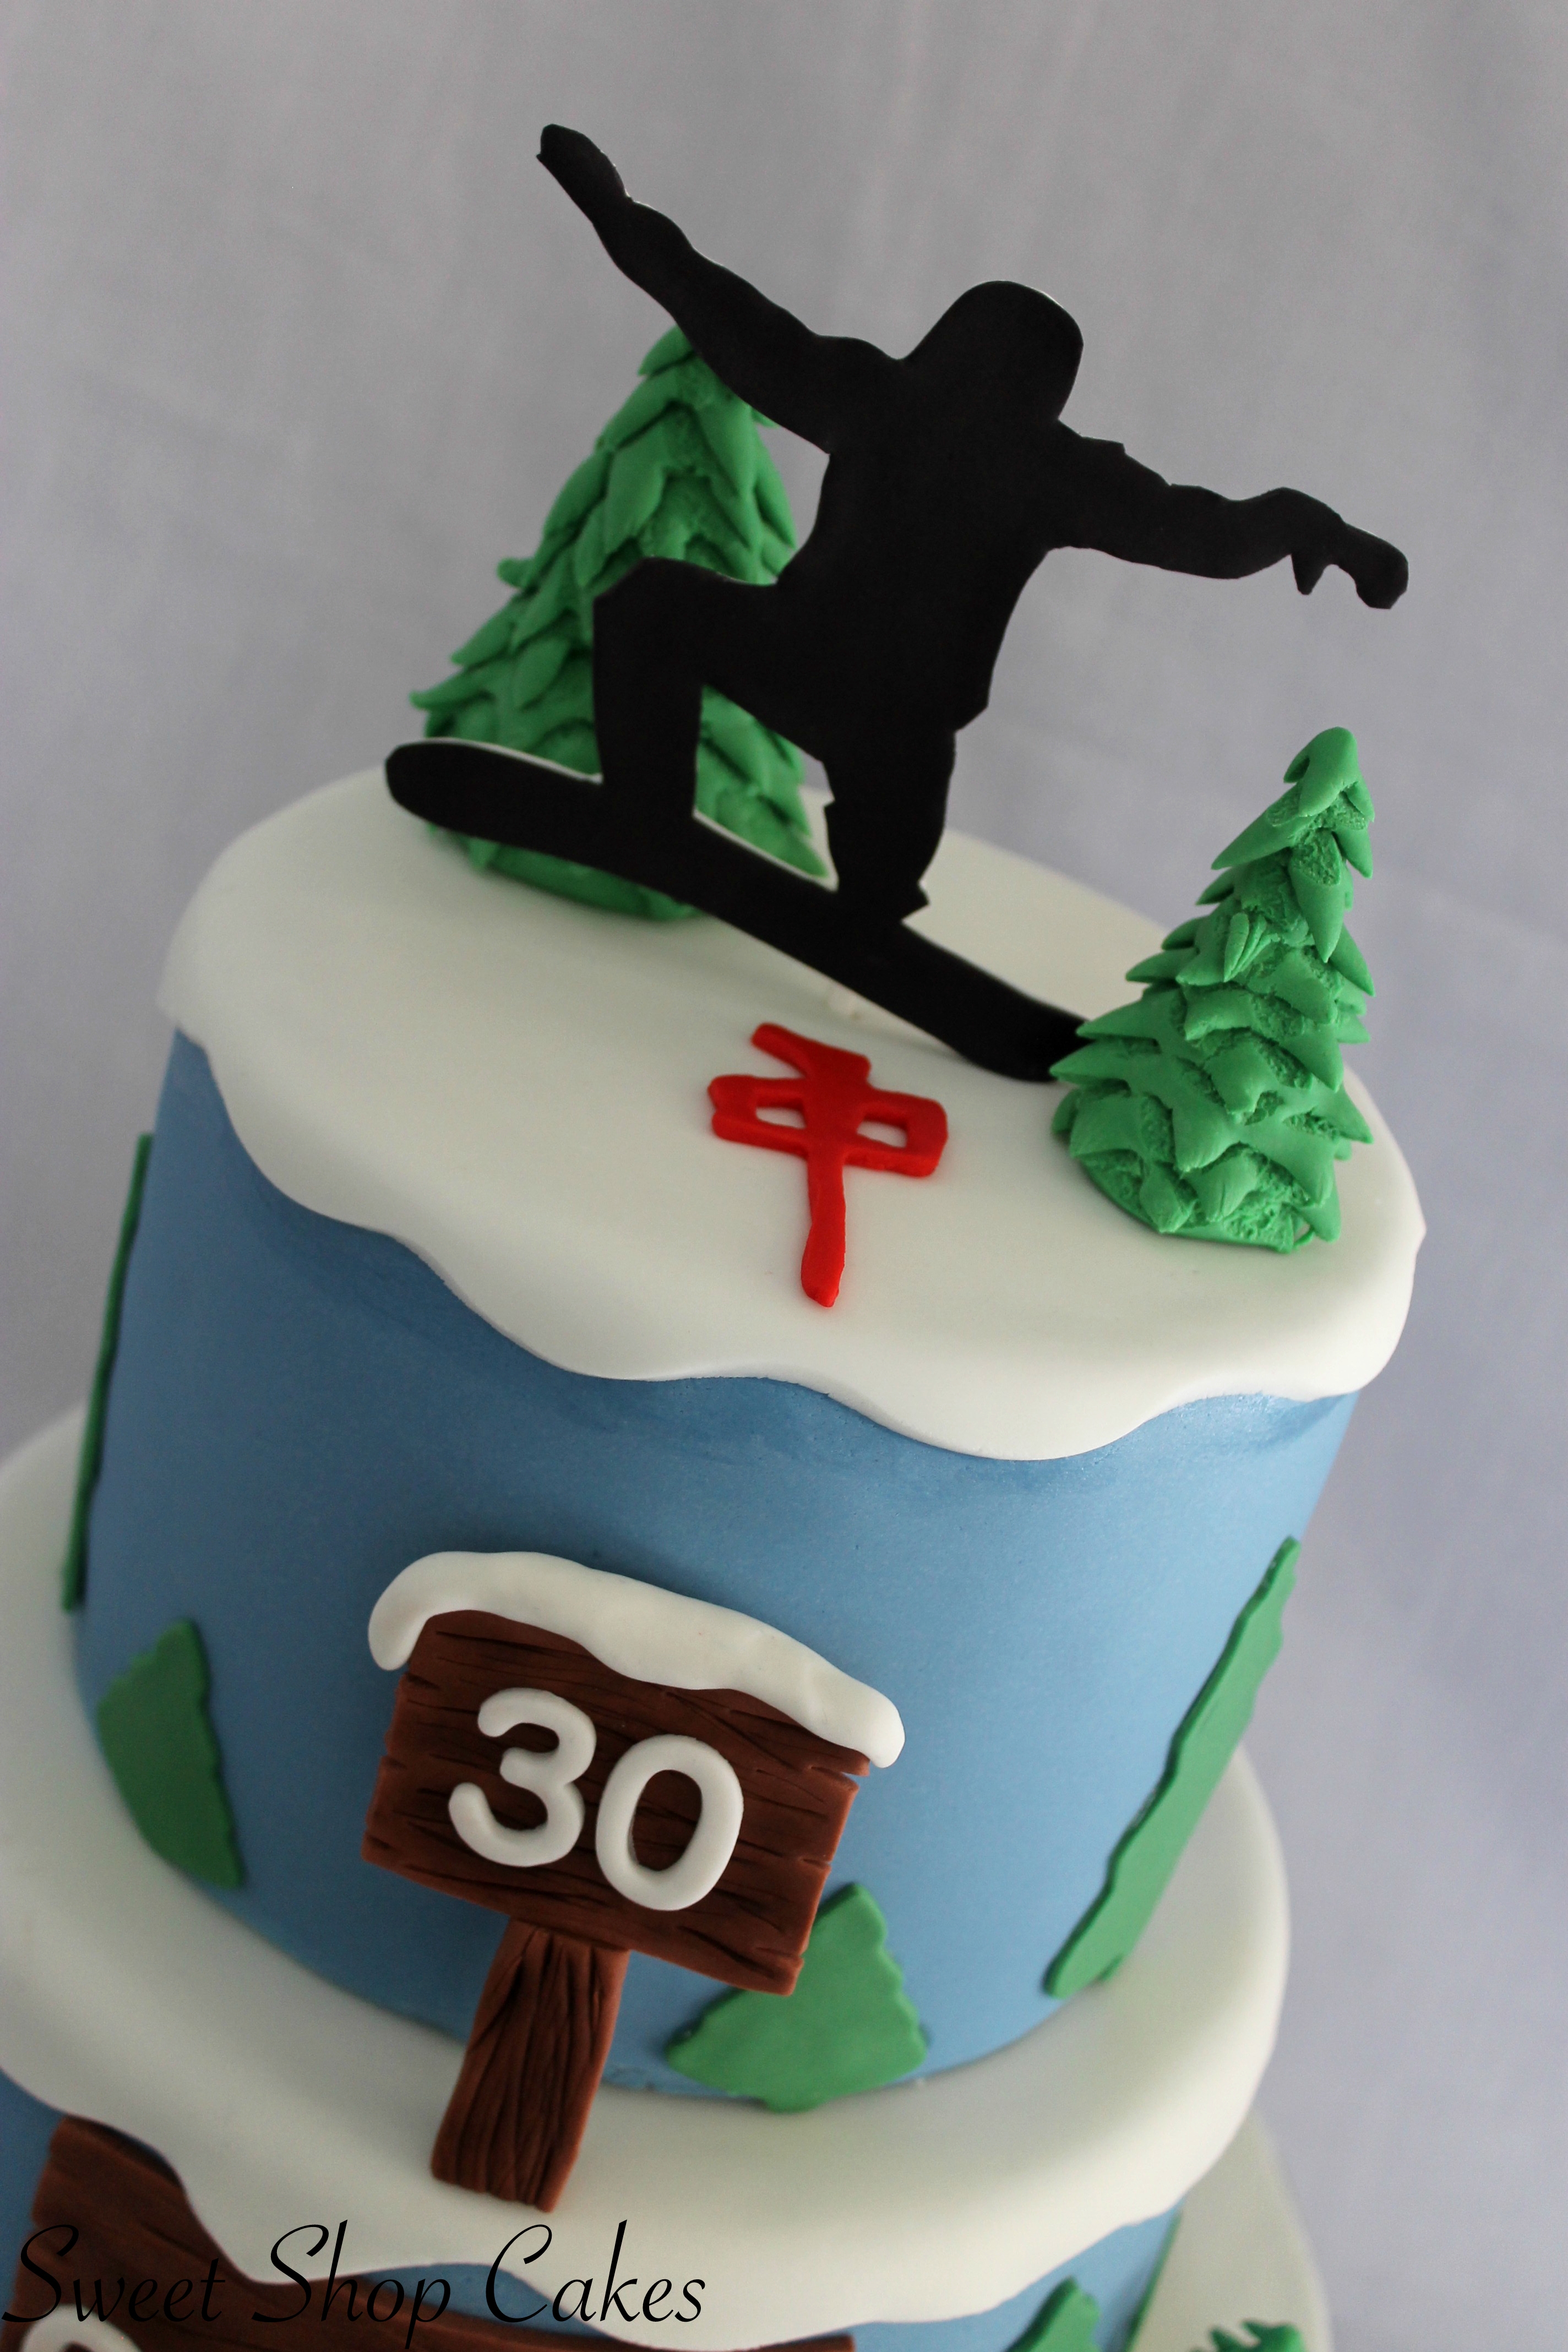 Snowboard Themed Birthday Cakes